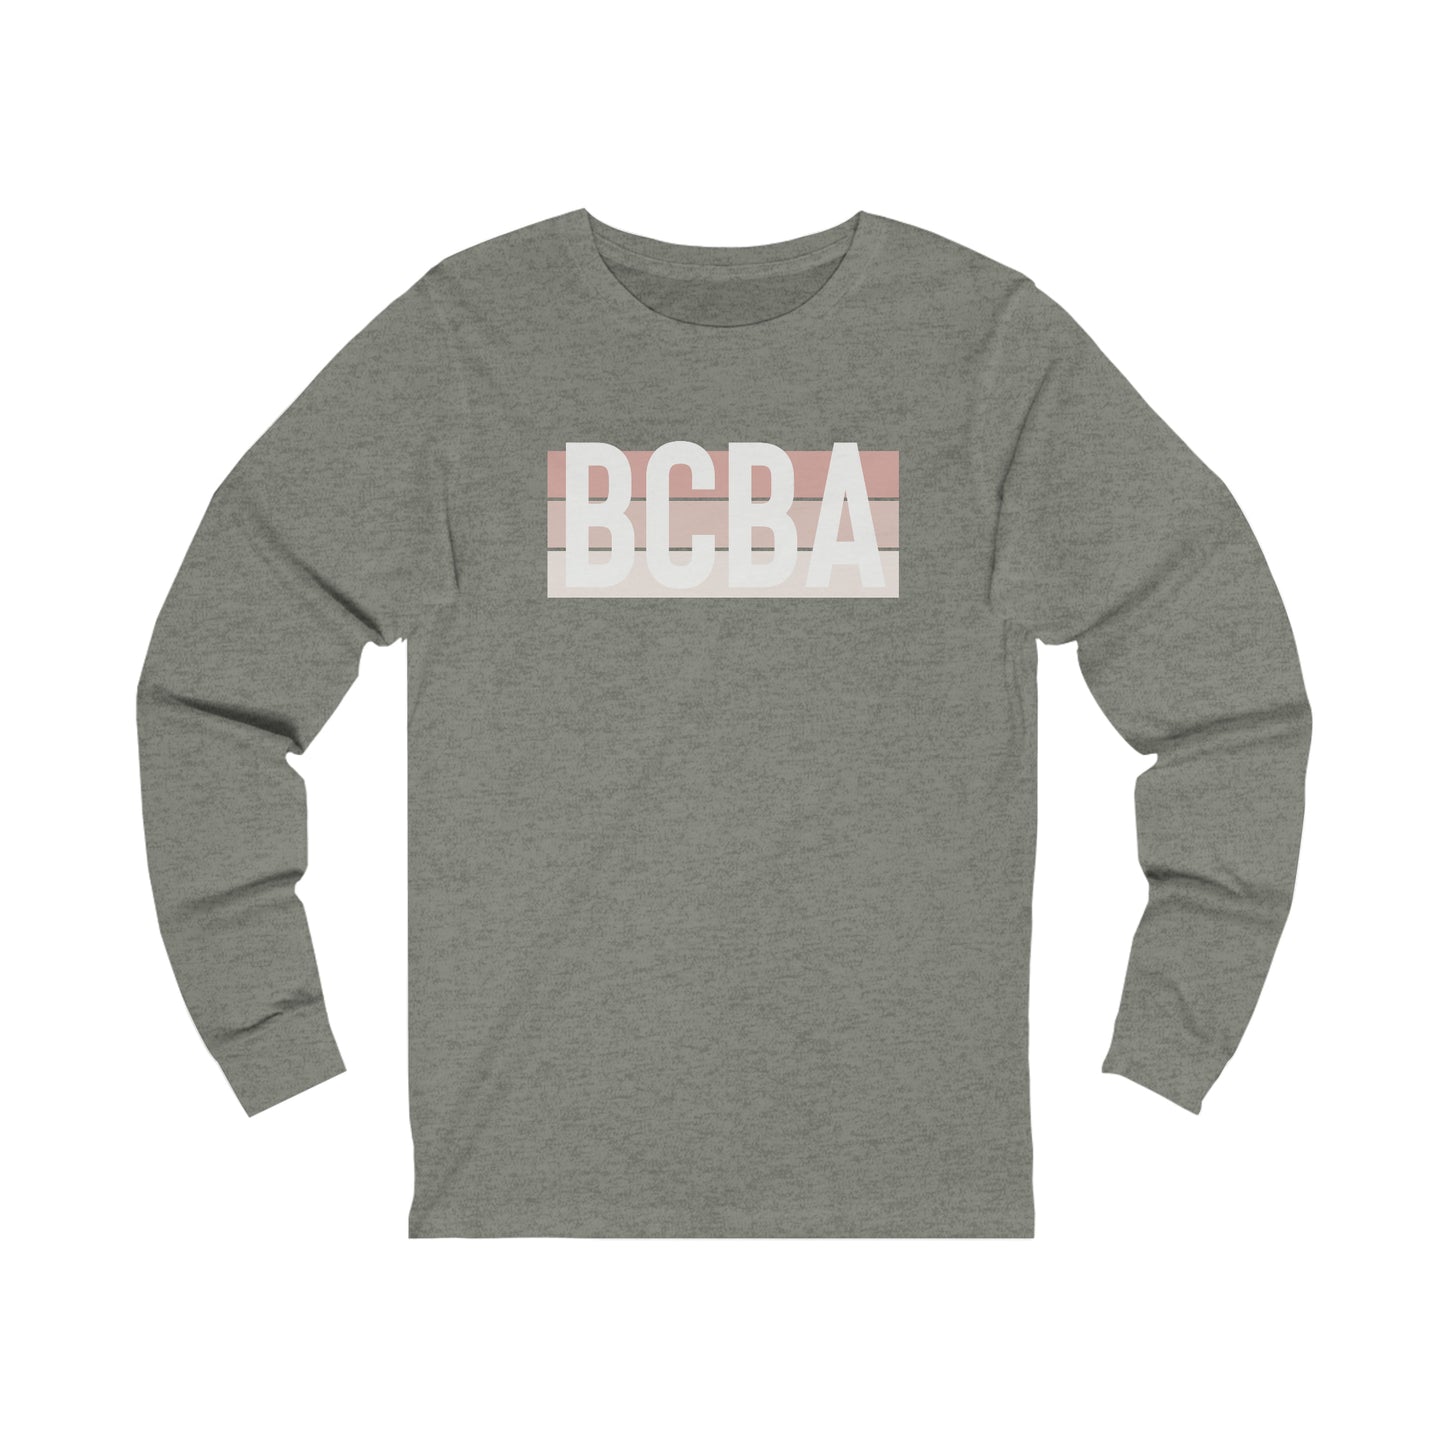 BCBA: Unisex Jersey Long Sleeve Tee